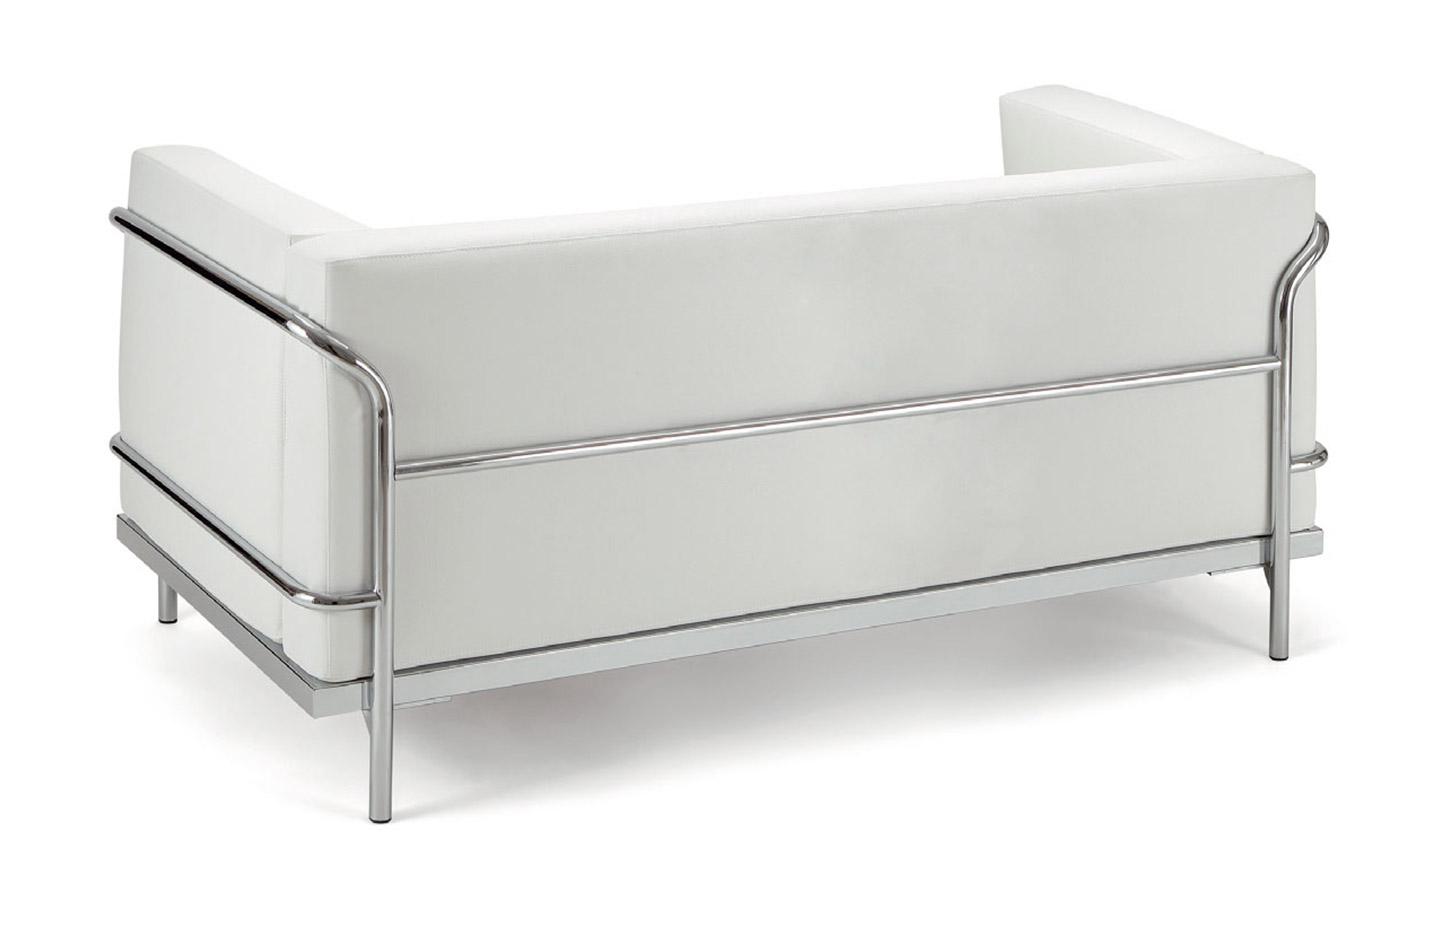 Design inspiré du canapé Le Corbusier LC2, Made in France, gamme Corobin fauteuil, France Bureau